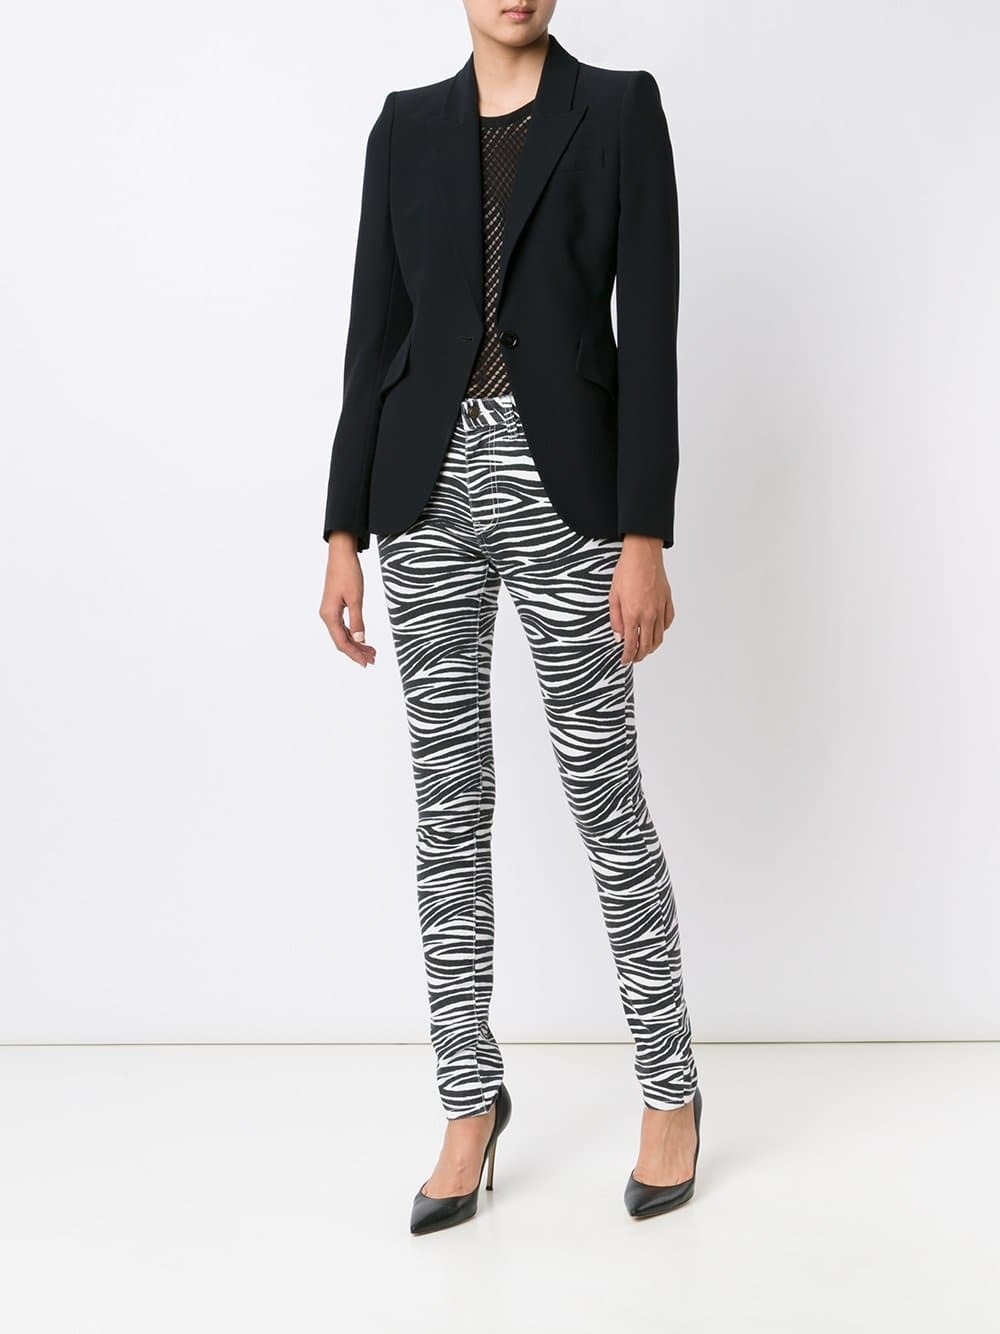 Saint Laurent Zebra Print Skinny Jeans, $706 | farfetch.com 